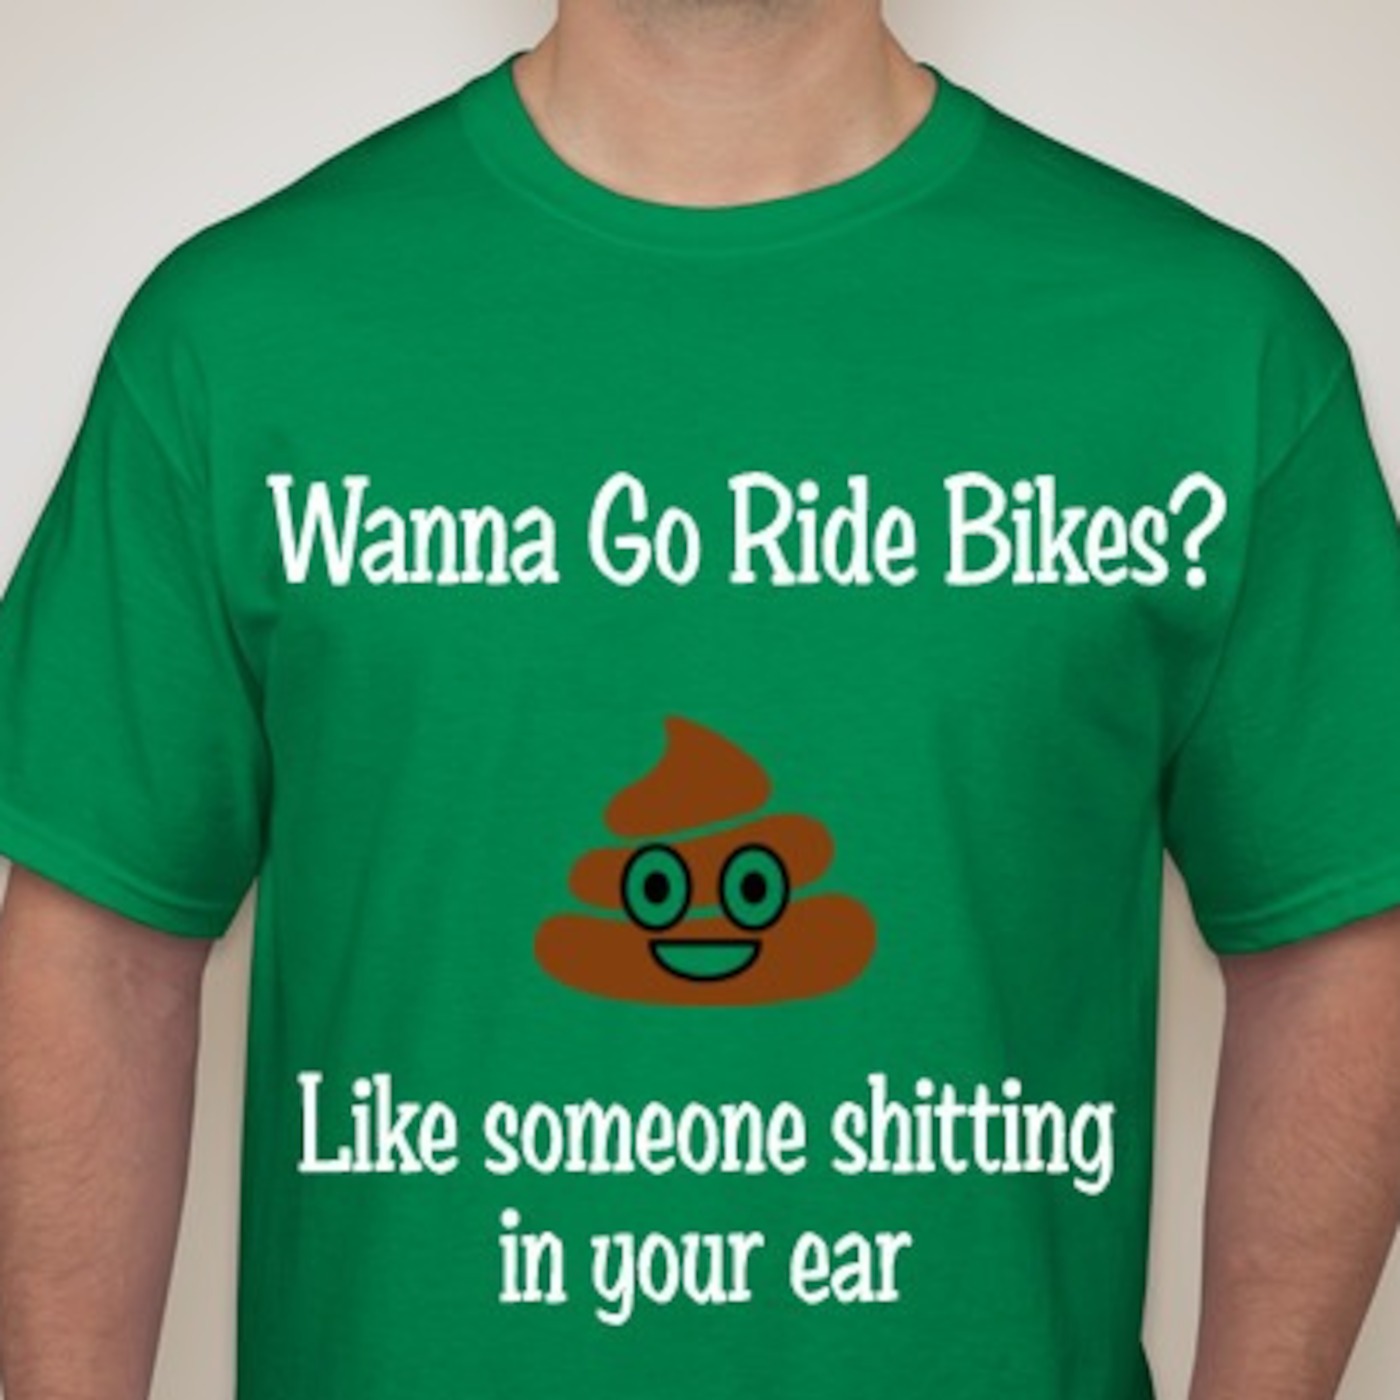 Wanna go ride bikes?